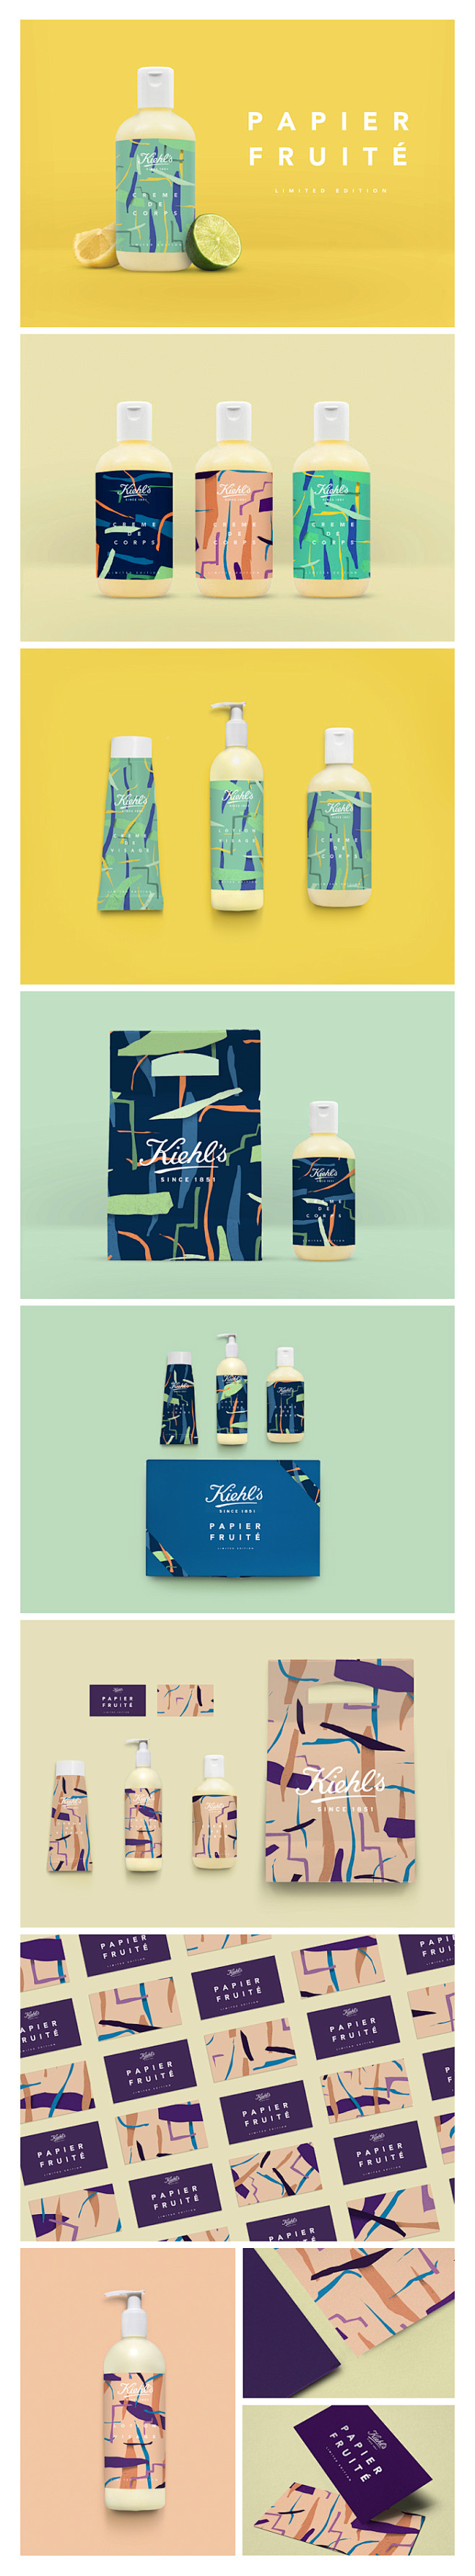 Kiehl's水果香味化妆品包装设计